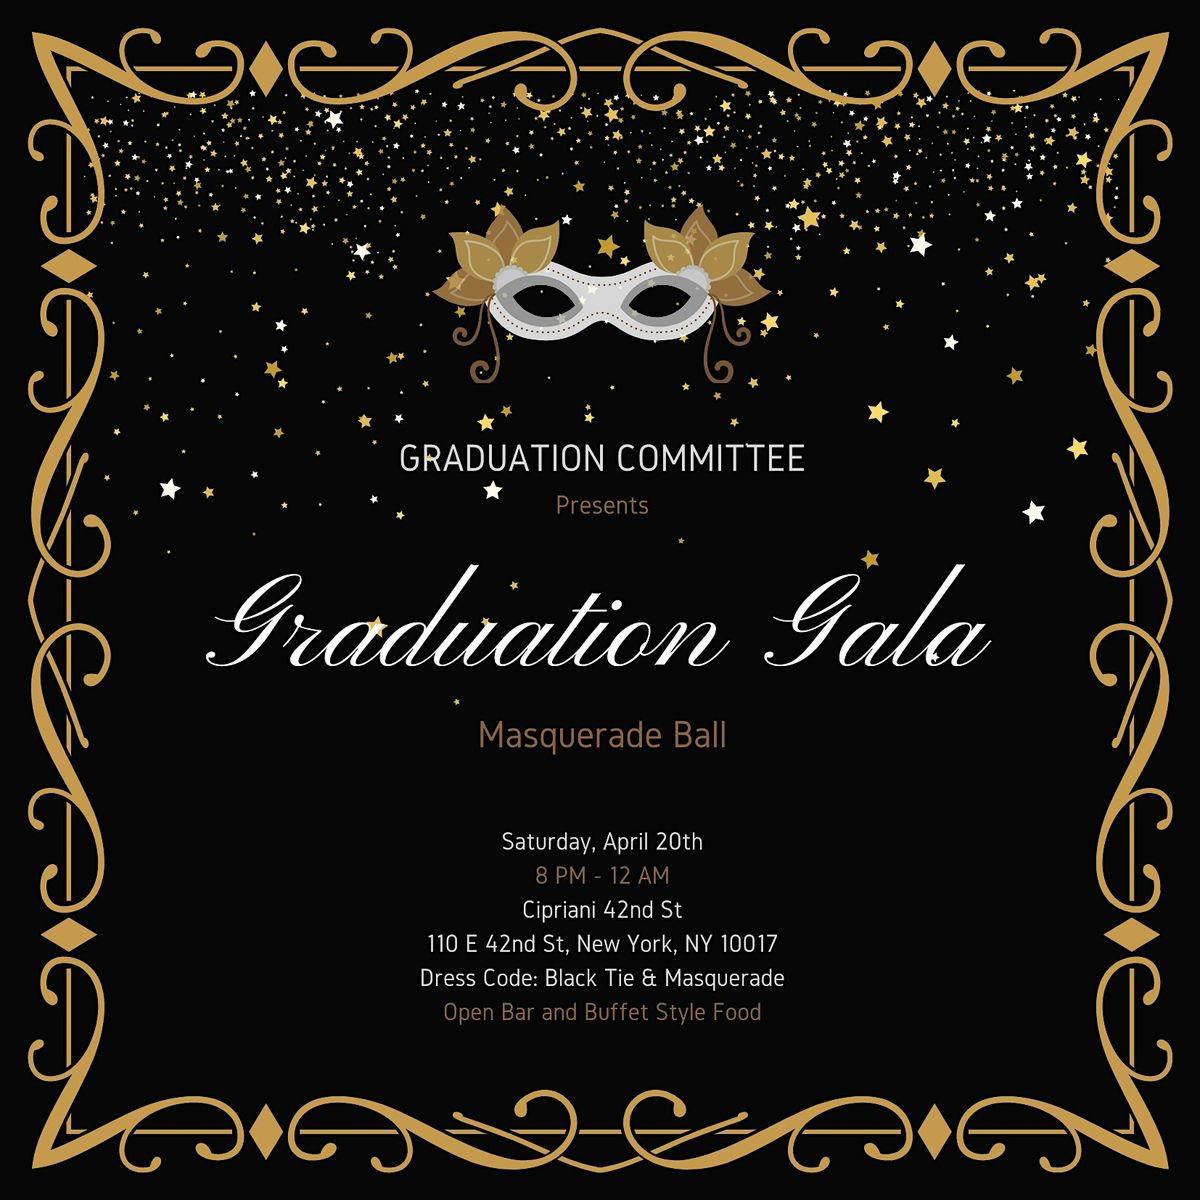 Graduation Gala